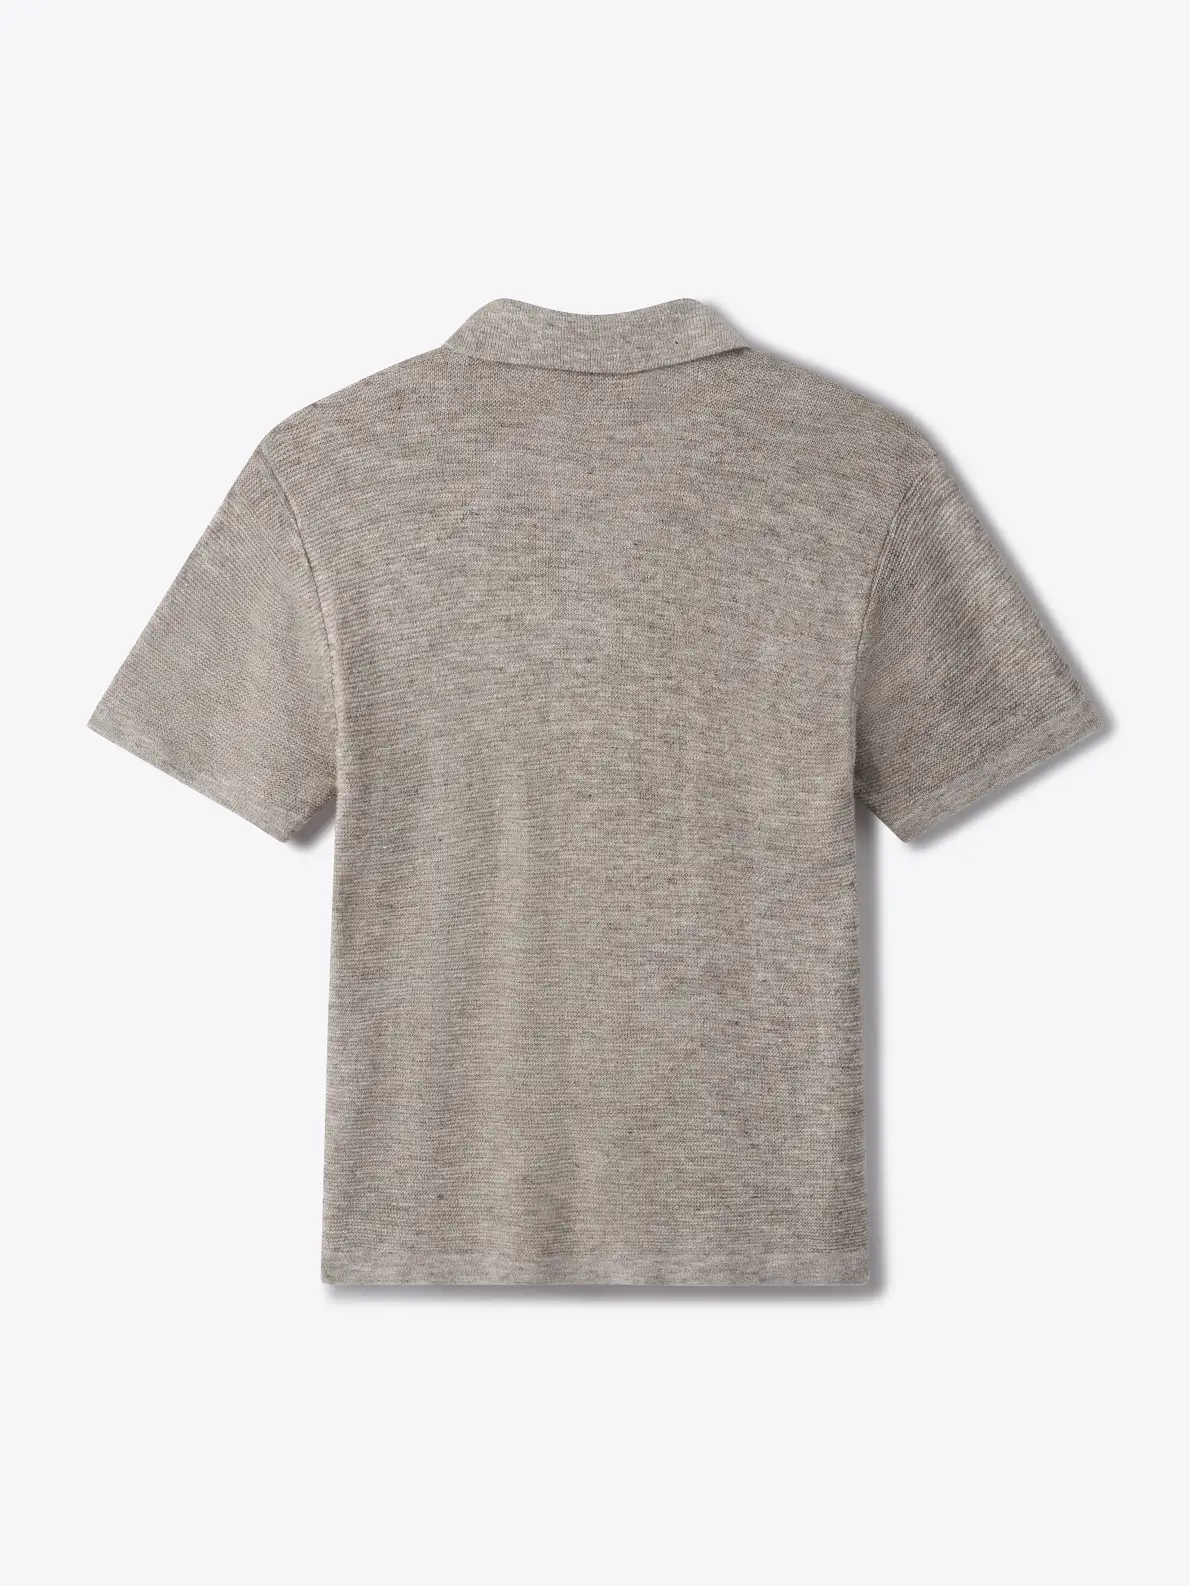 Gianni Sweater Shirt - Heathered Sand